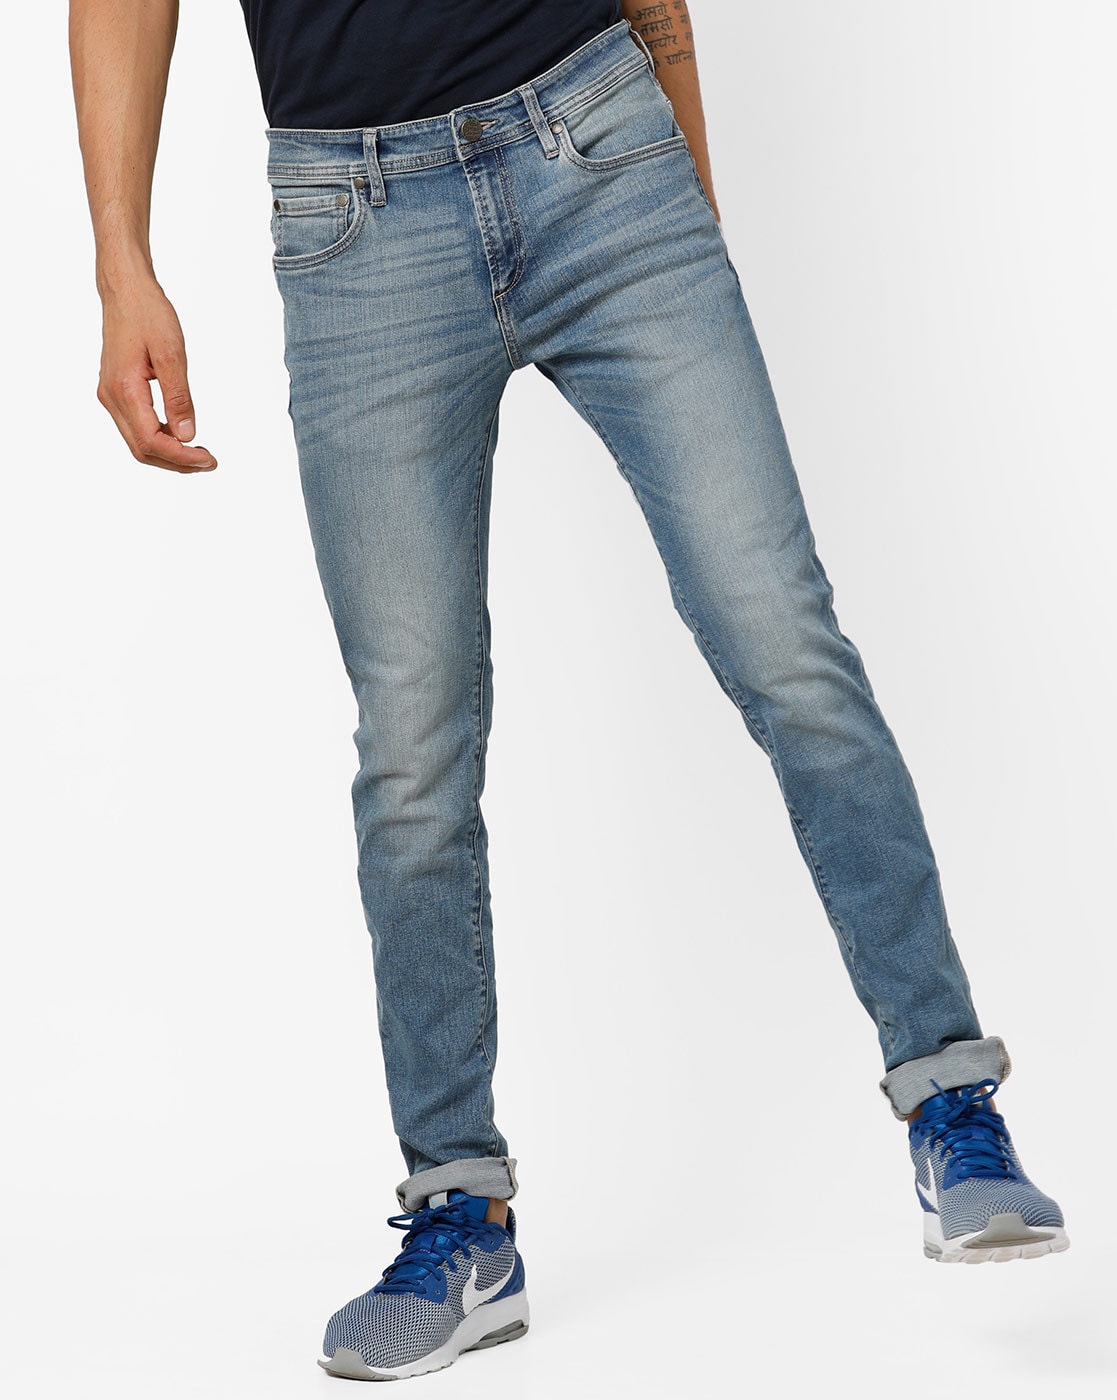 men's mid rise skinny jeans